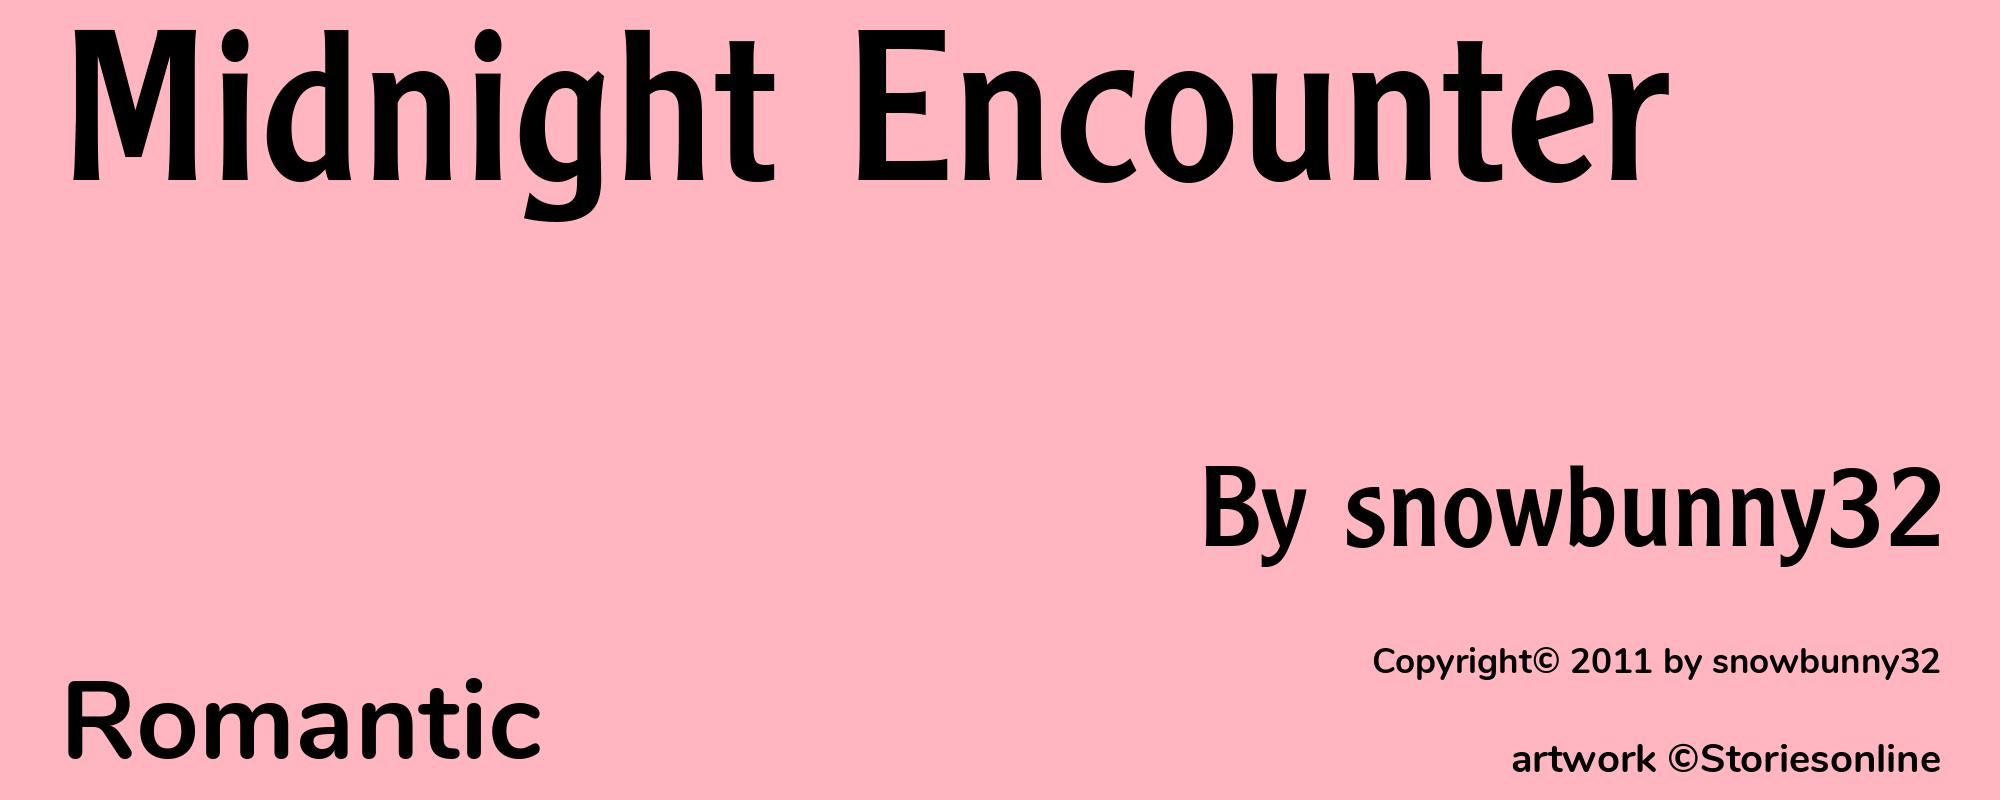 Midnight Encounter - Cover